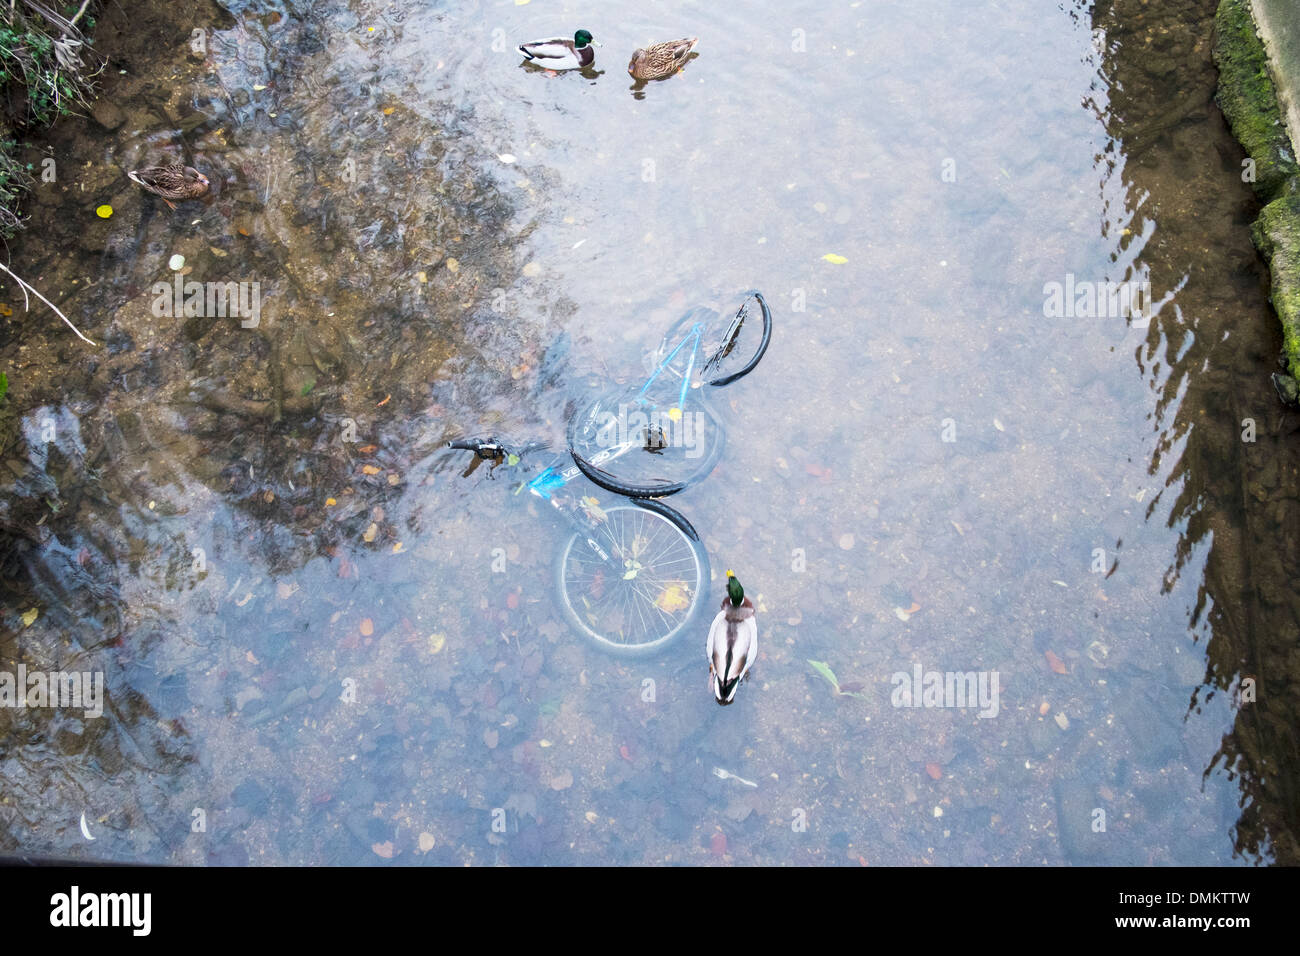 Ausrangierte Push Fahrrad Zyklus in Fluss Stockente Enten vorbei geworfen Stockfoto